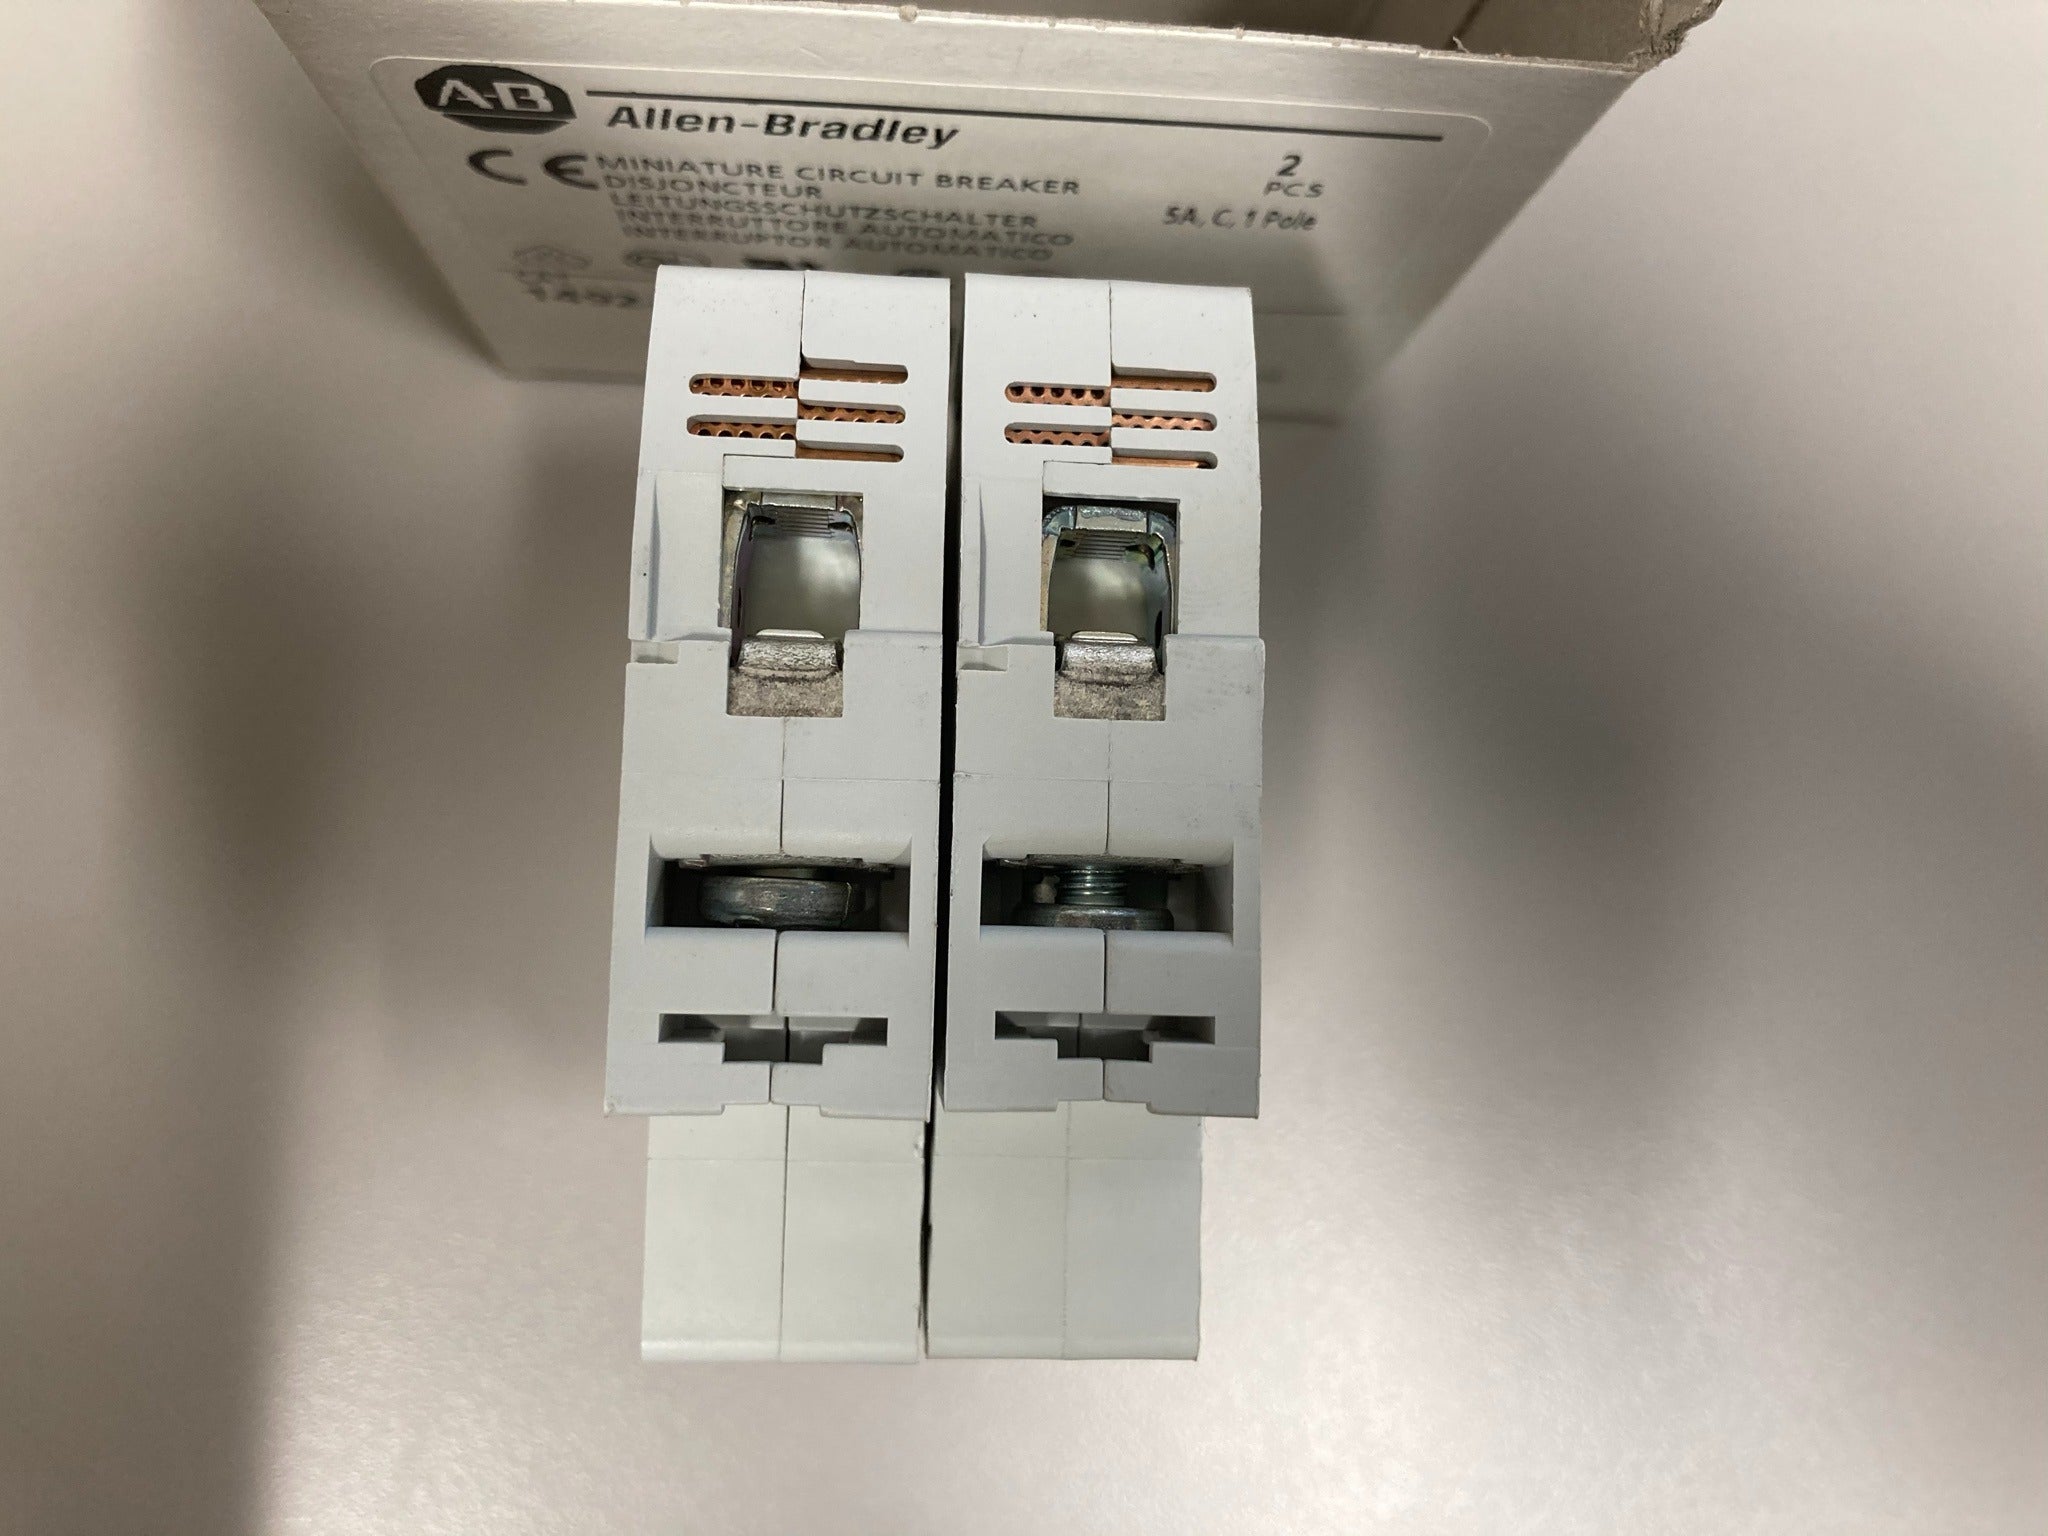 Allen-Bradley Miniature Circuit Breaker